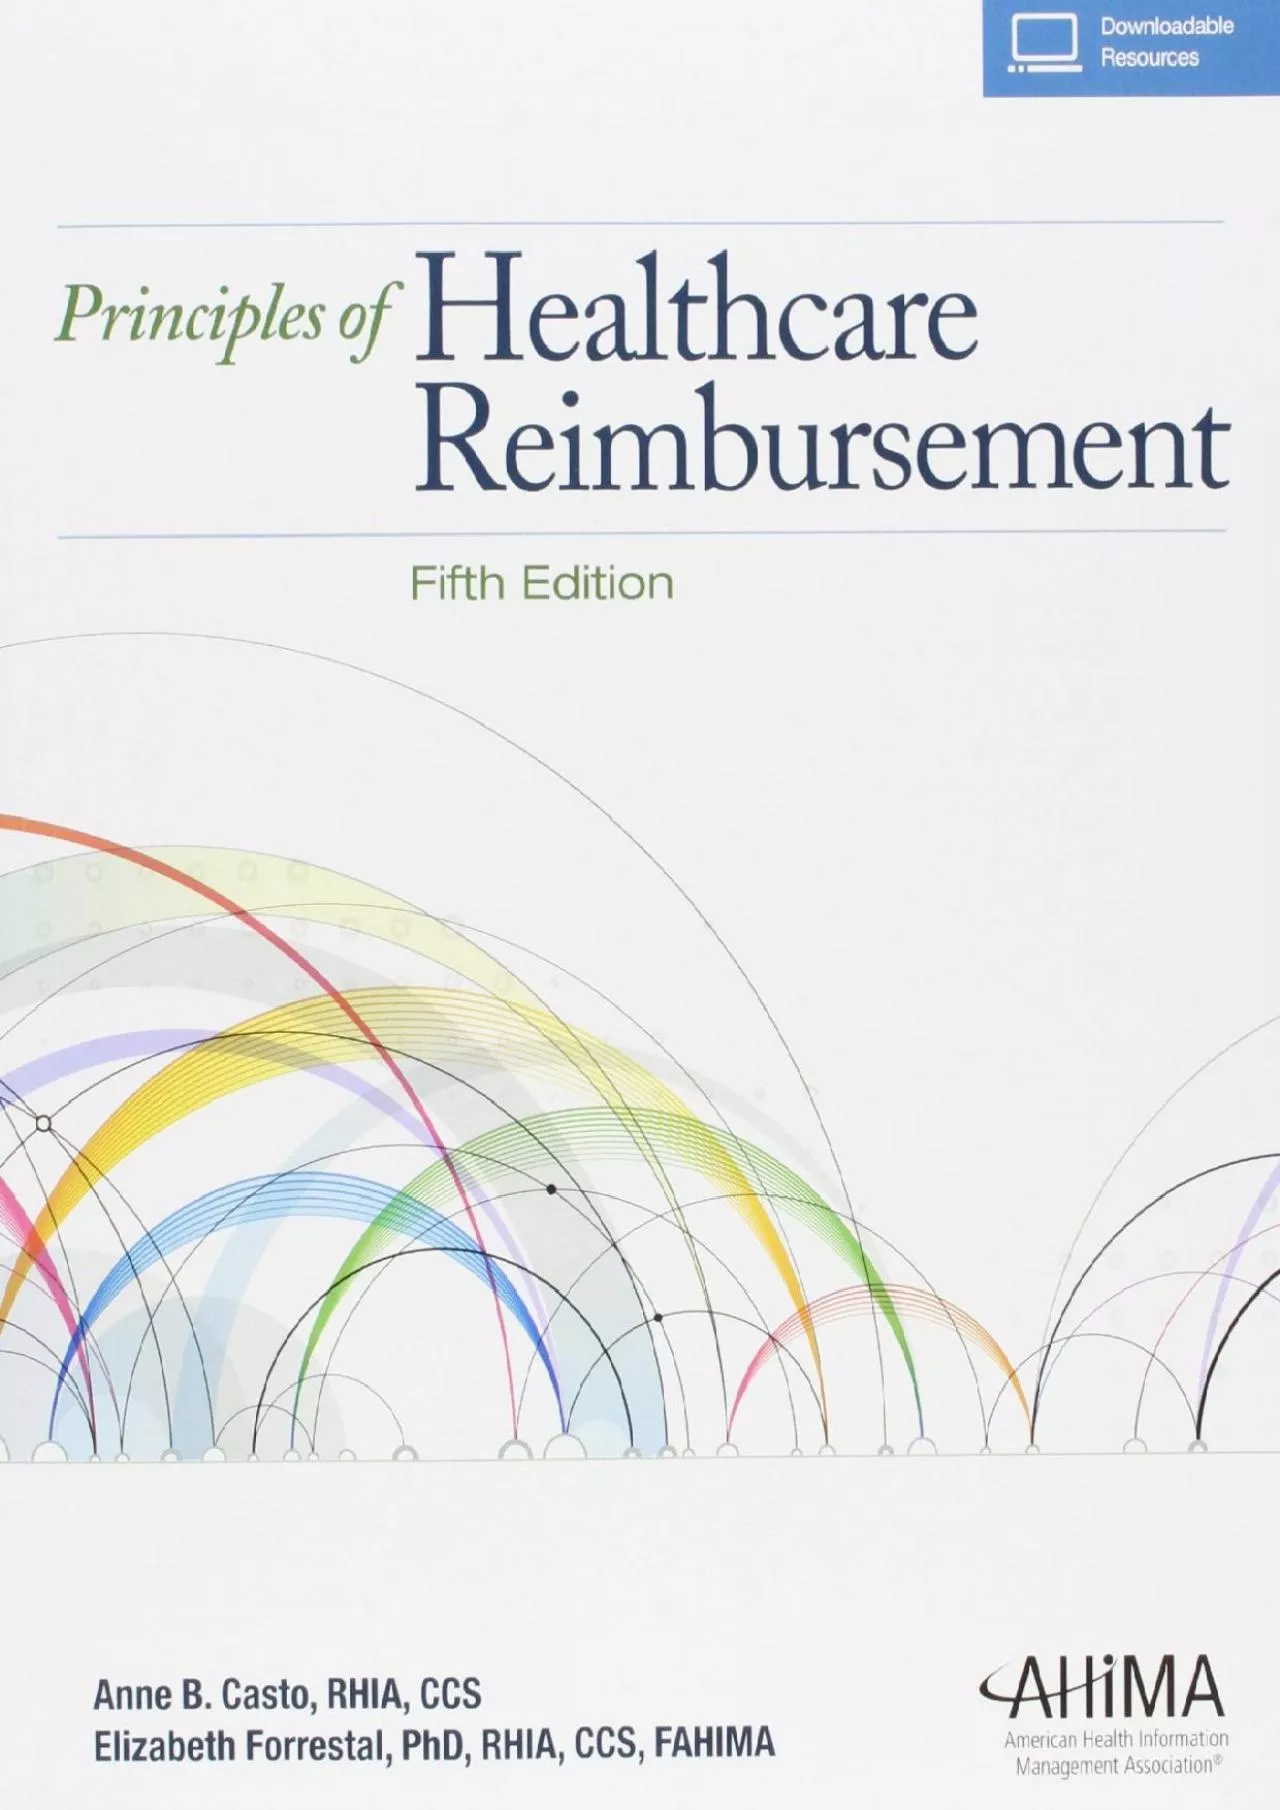 (DOWNLOAD)-Principles of Healthcare Reimbursement